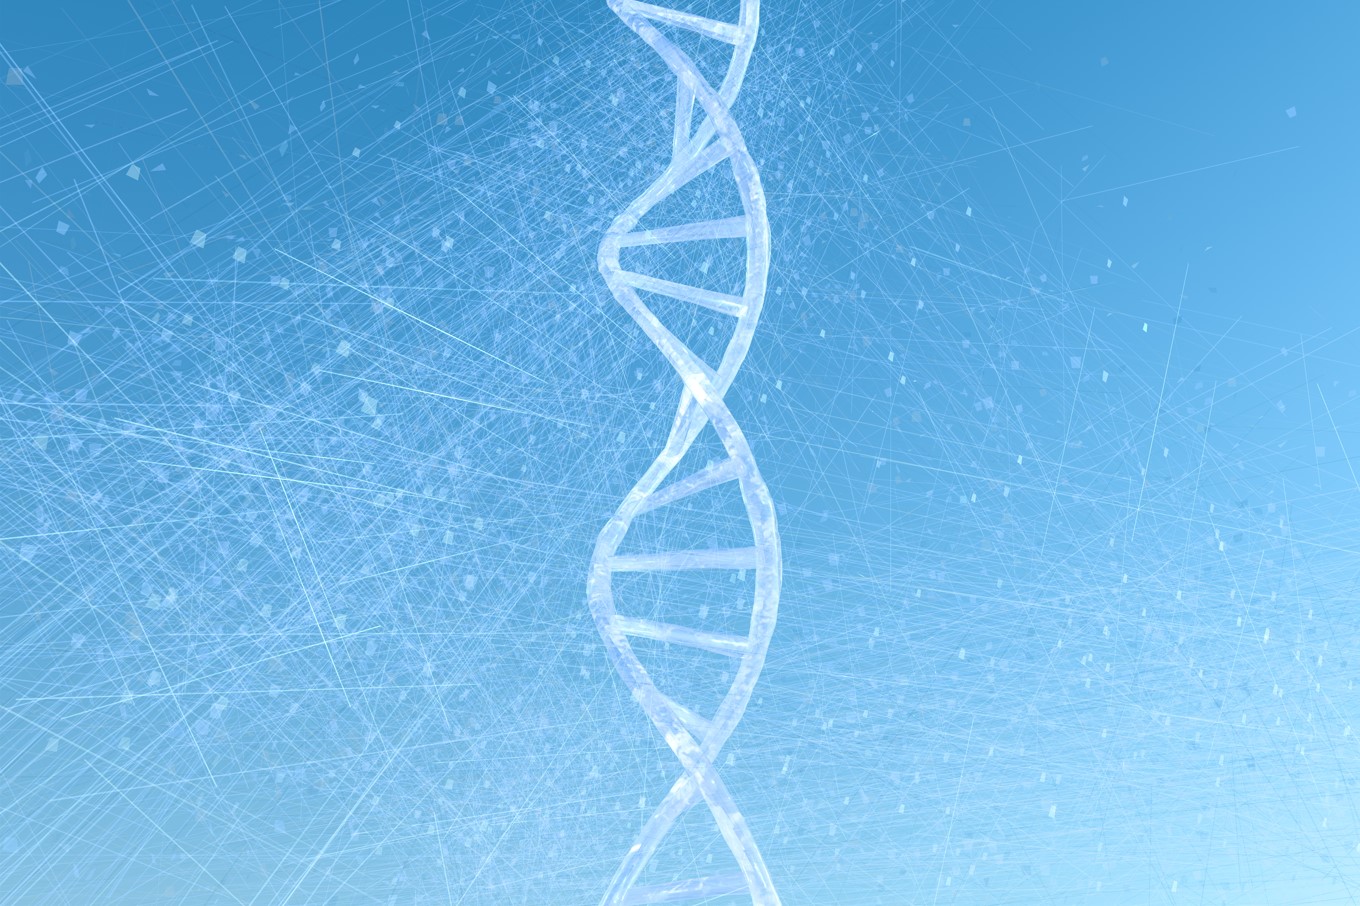 DNA ladder reaching a clear blue sky